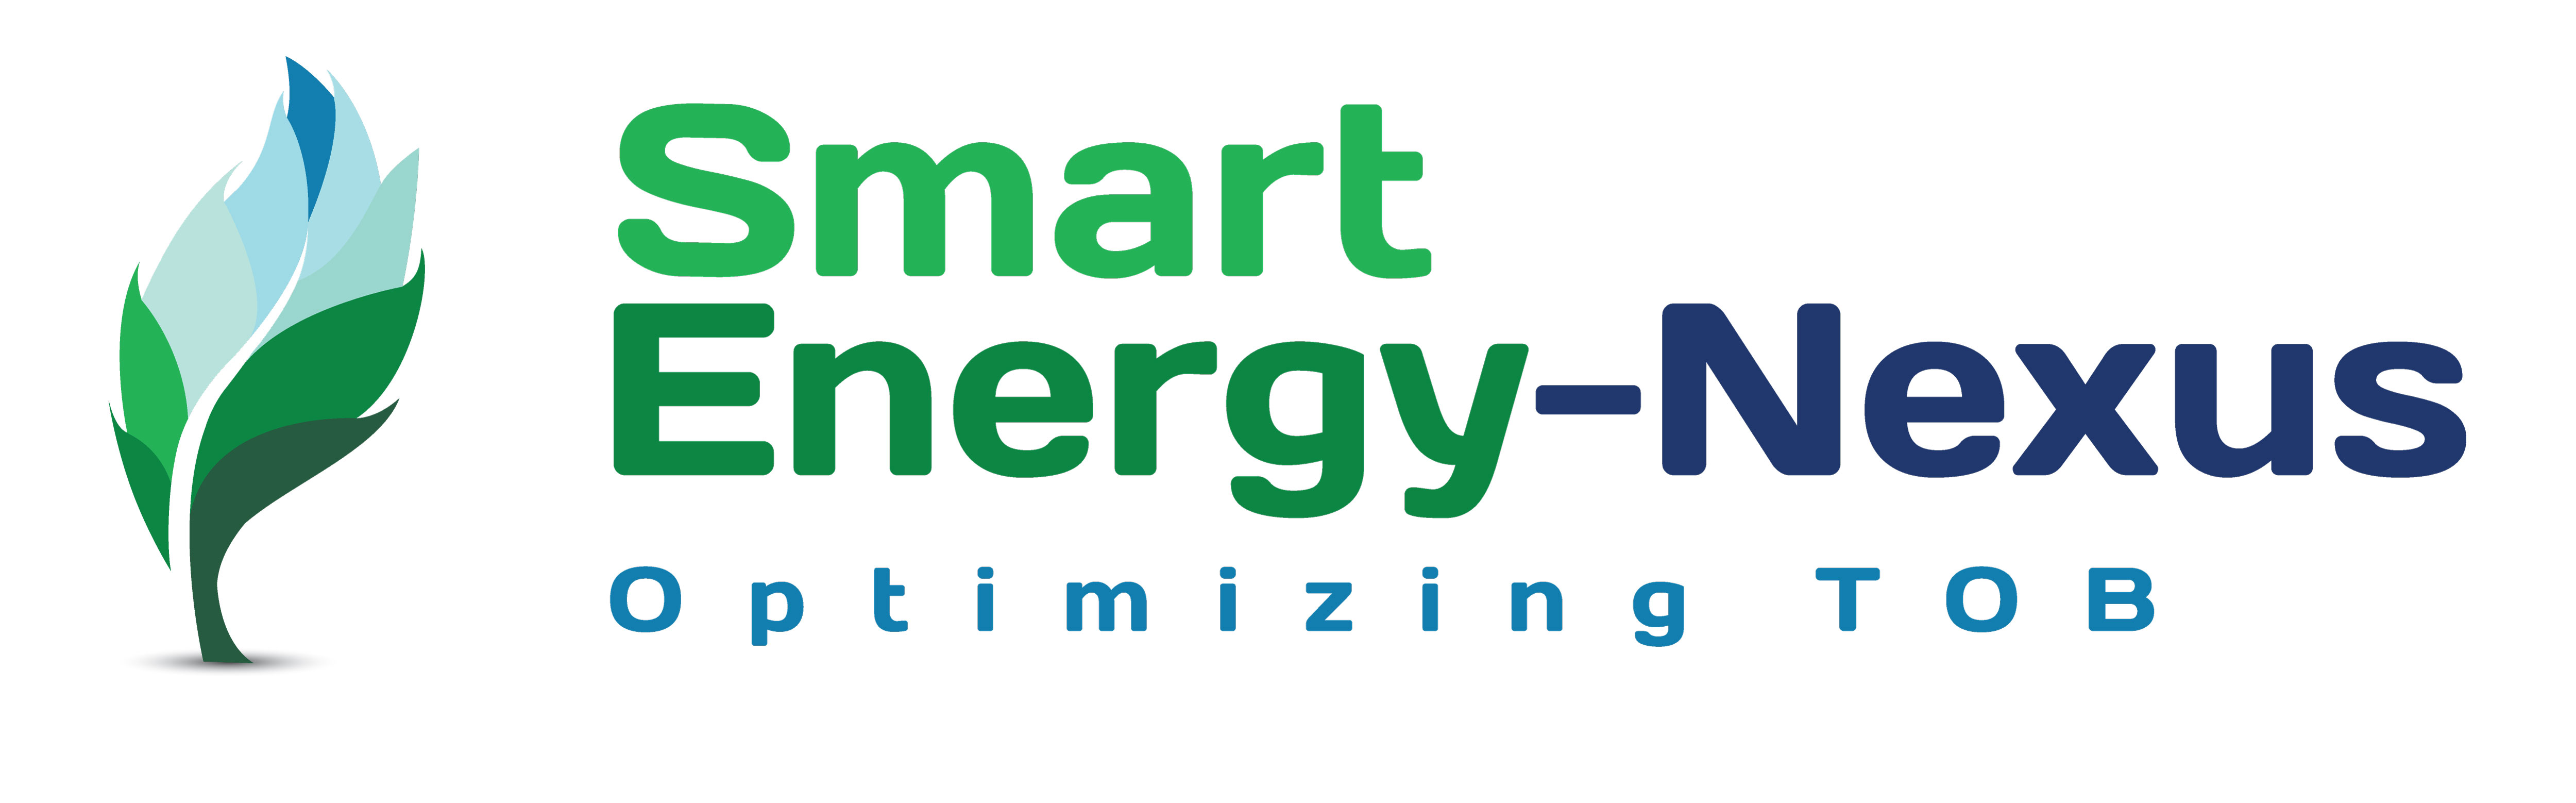 Small SmartEnergy-Nexus logo, click to go to home page.